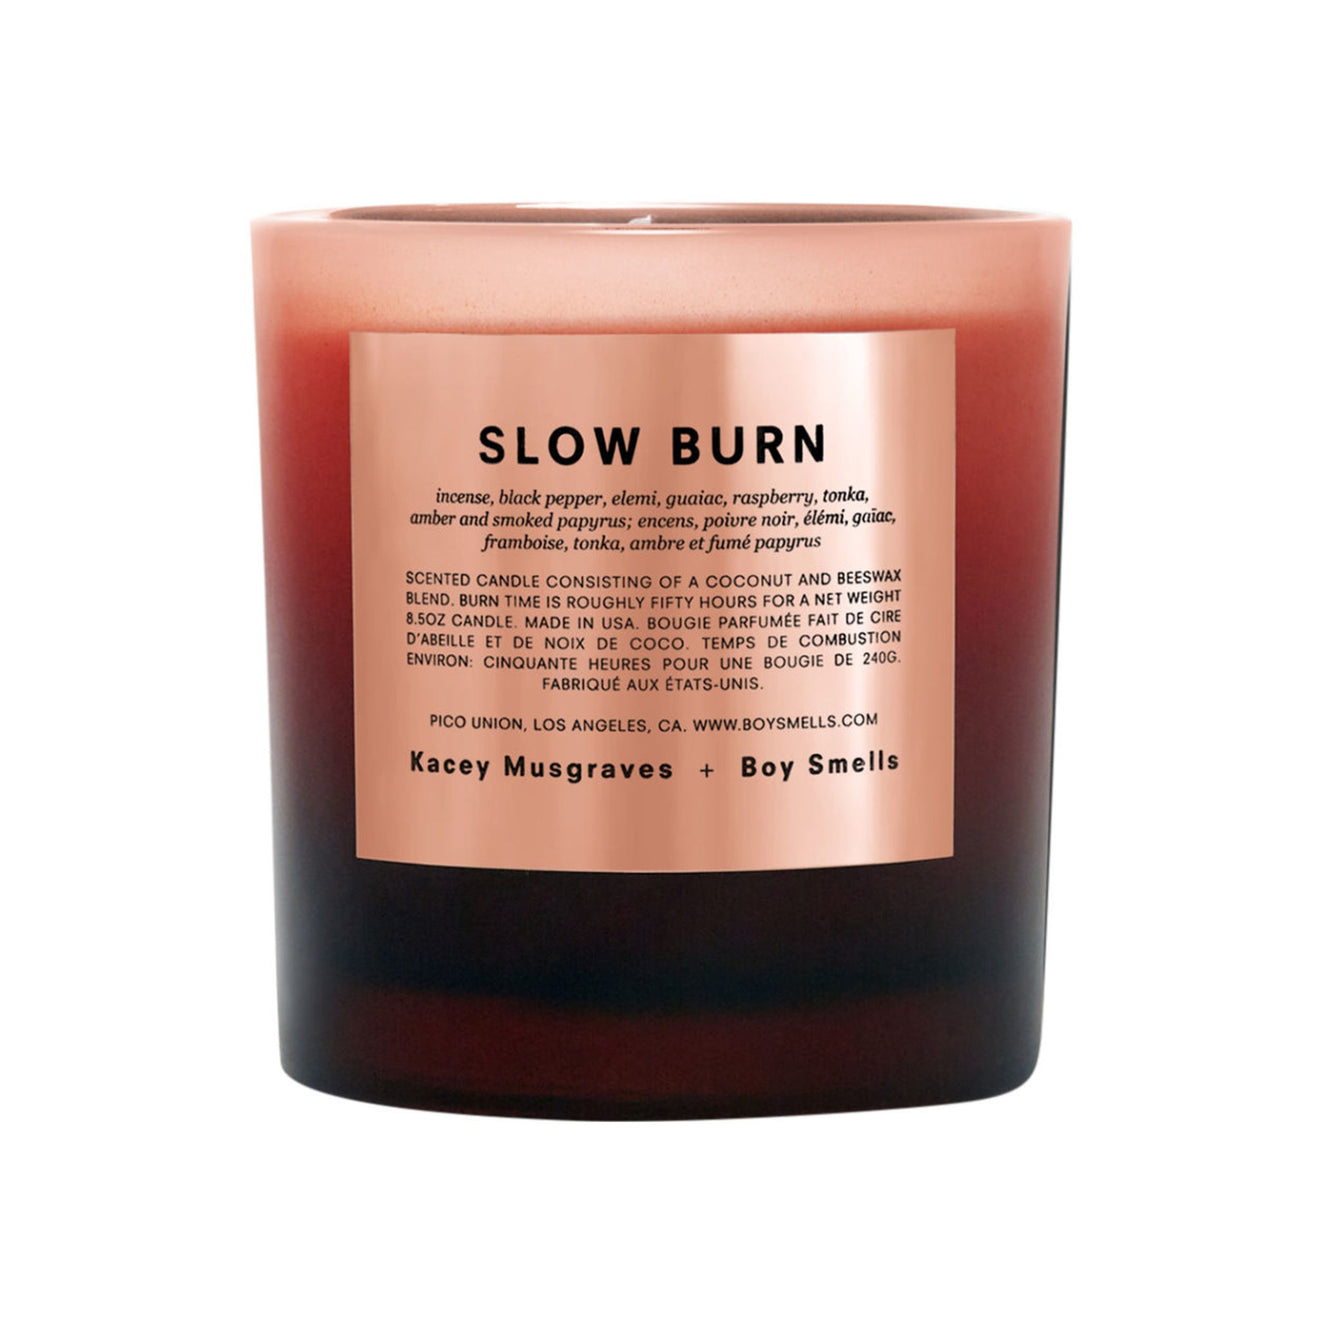 Boy Smells Slow Burn Candle main image.